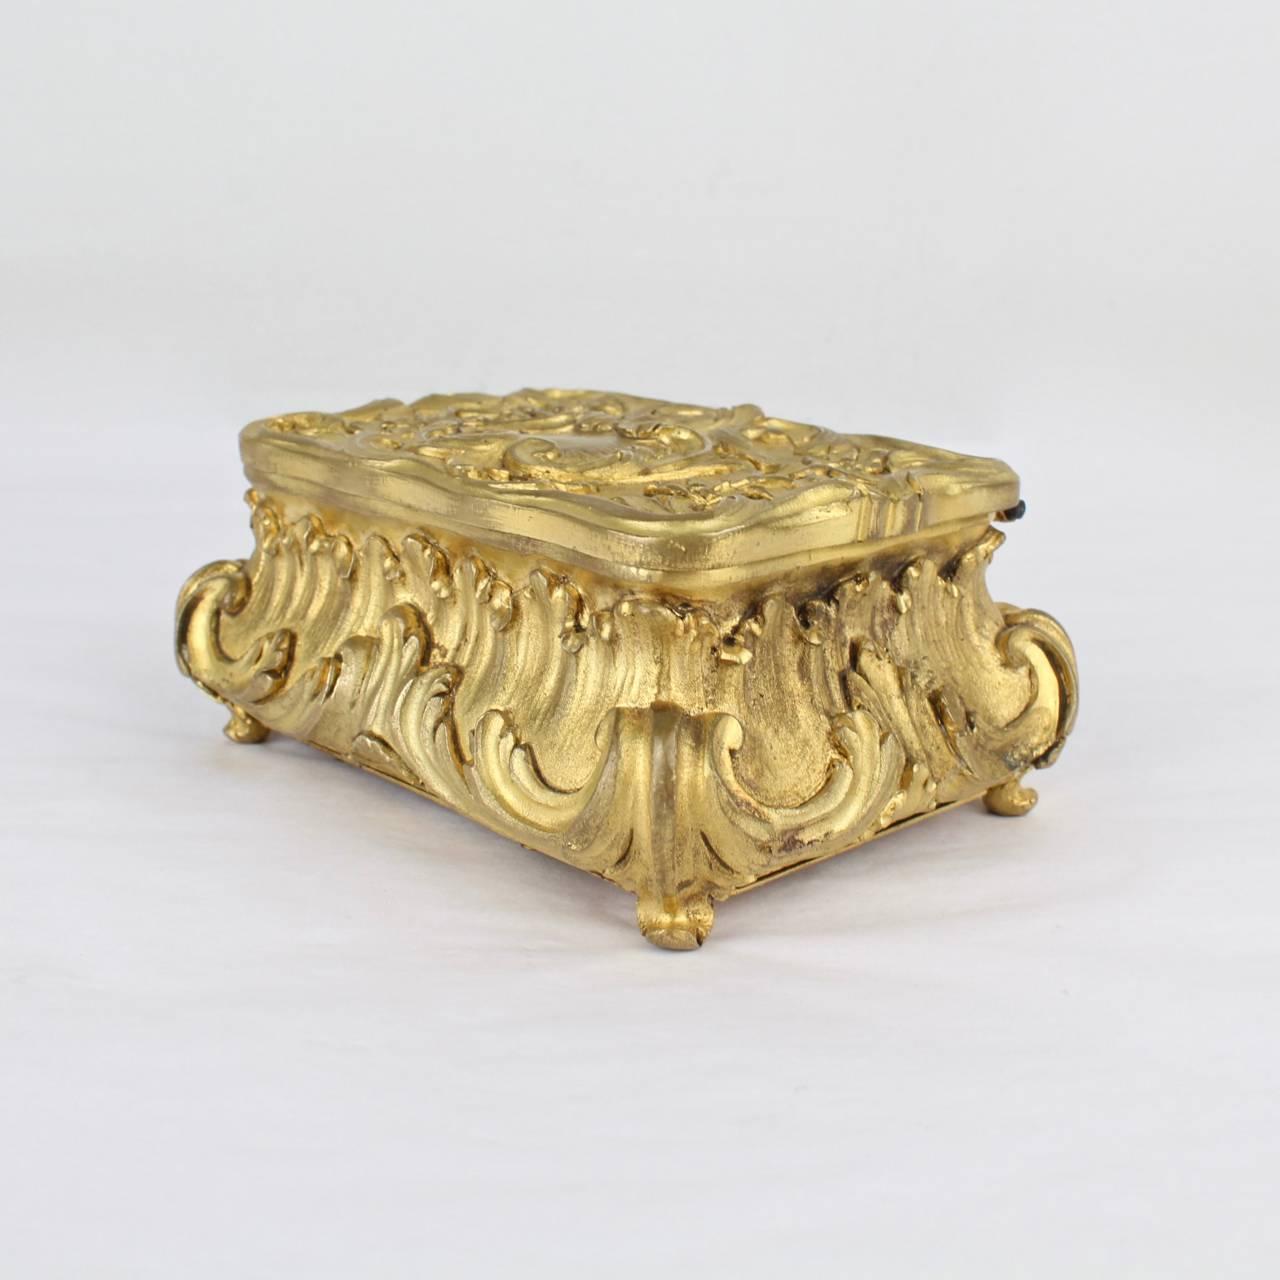 Antique Small Doré Gilt Bronze Table Box or Casket, 19th Century (Rokoko)